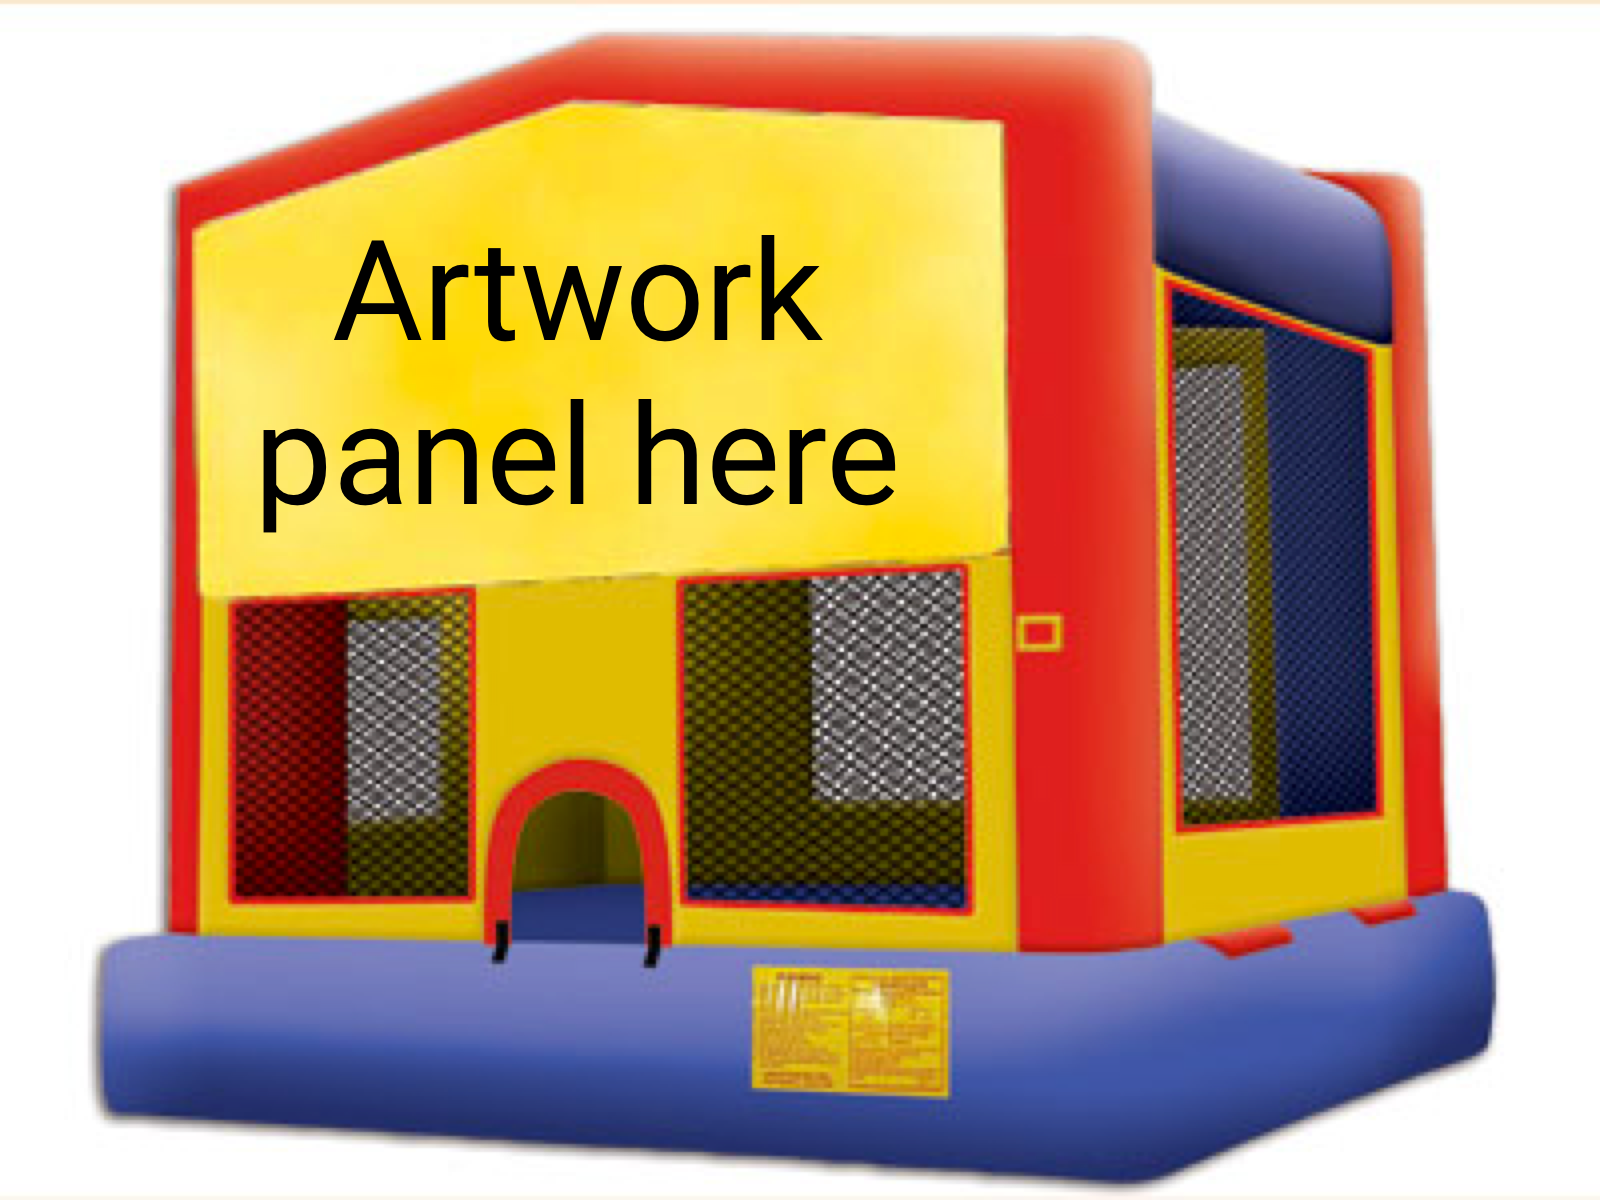 Photo of bouncy castle reading "artwork panel here."